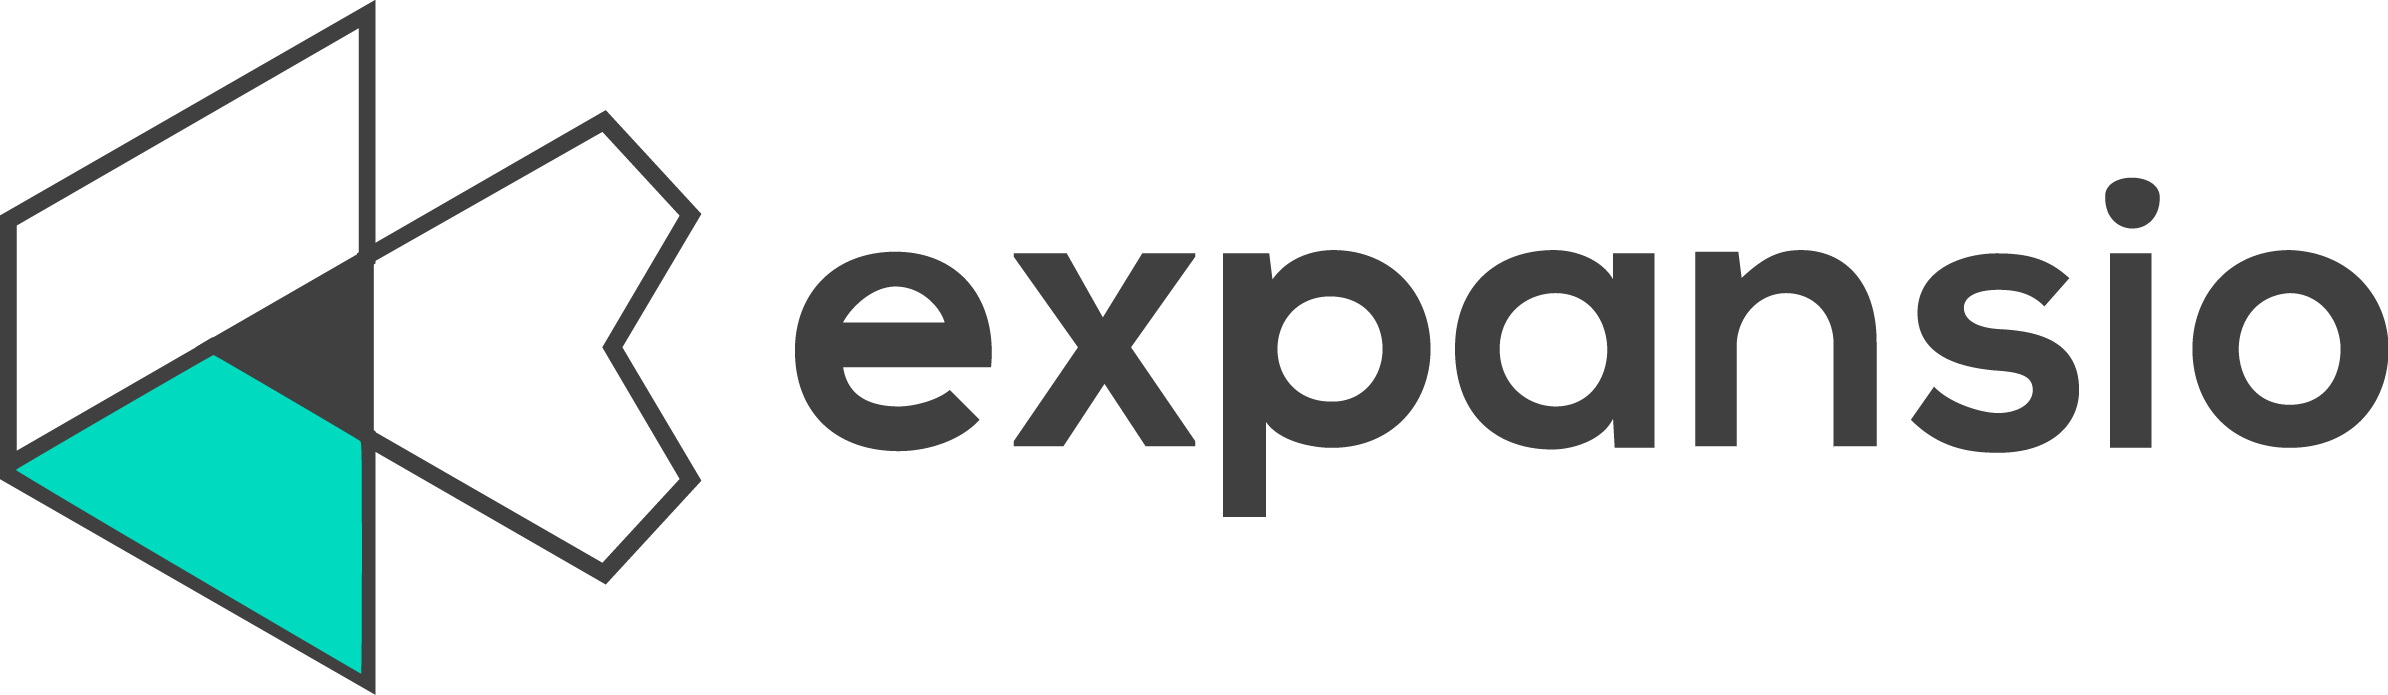 Company logo Expansio